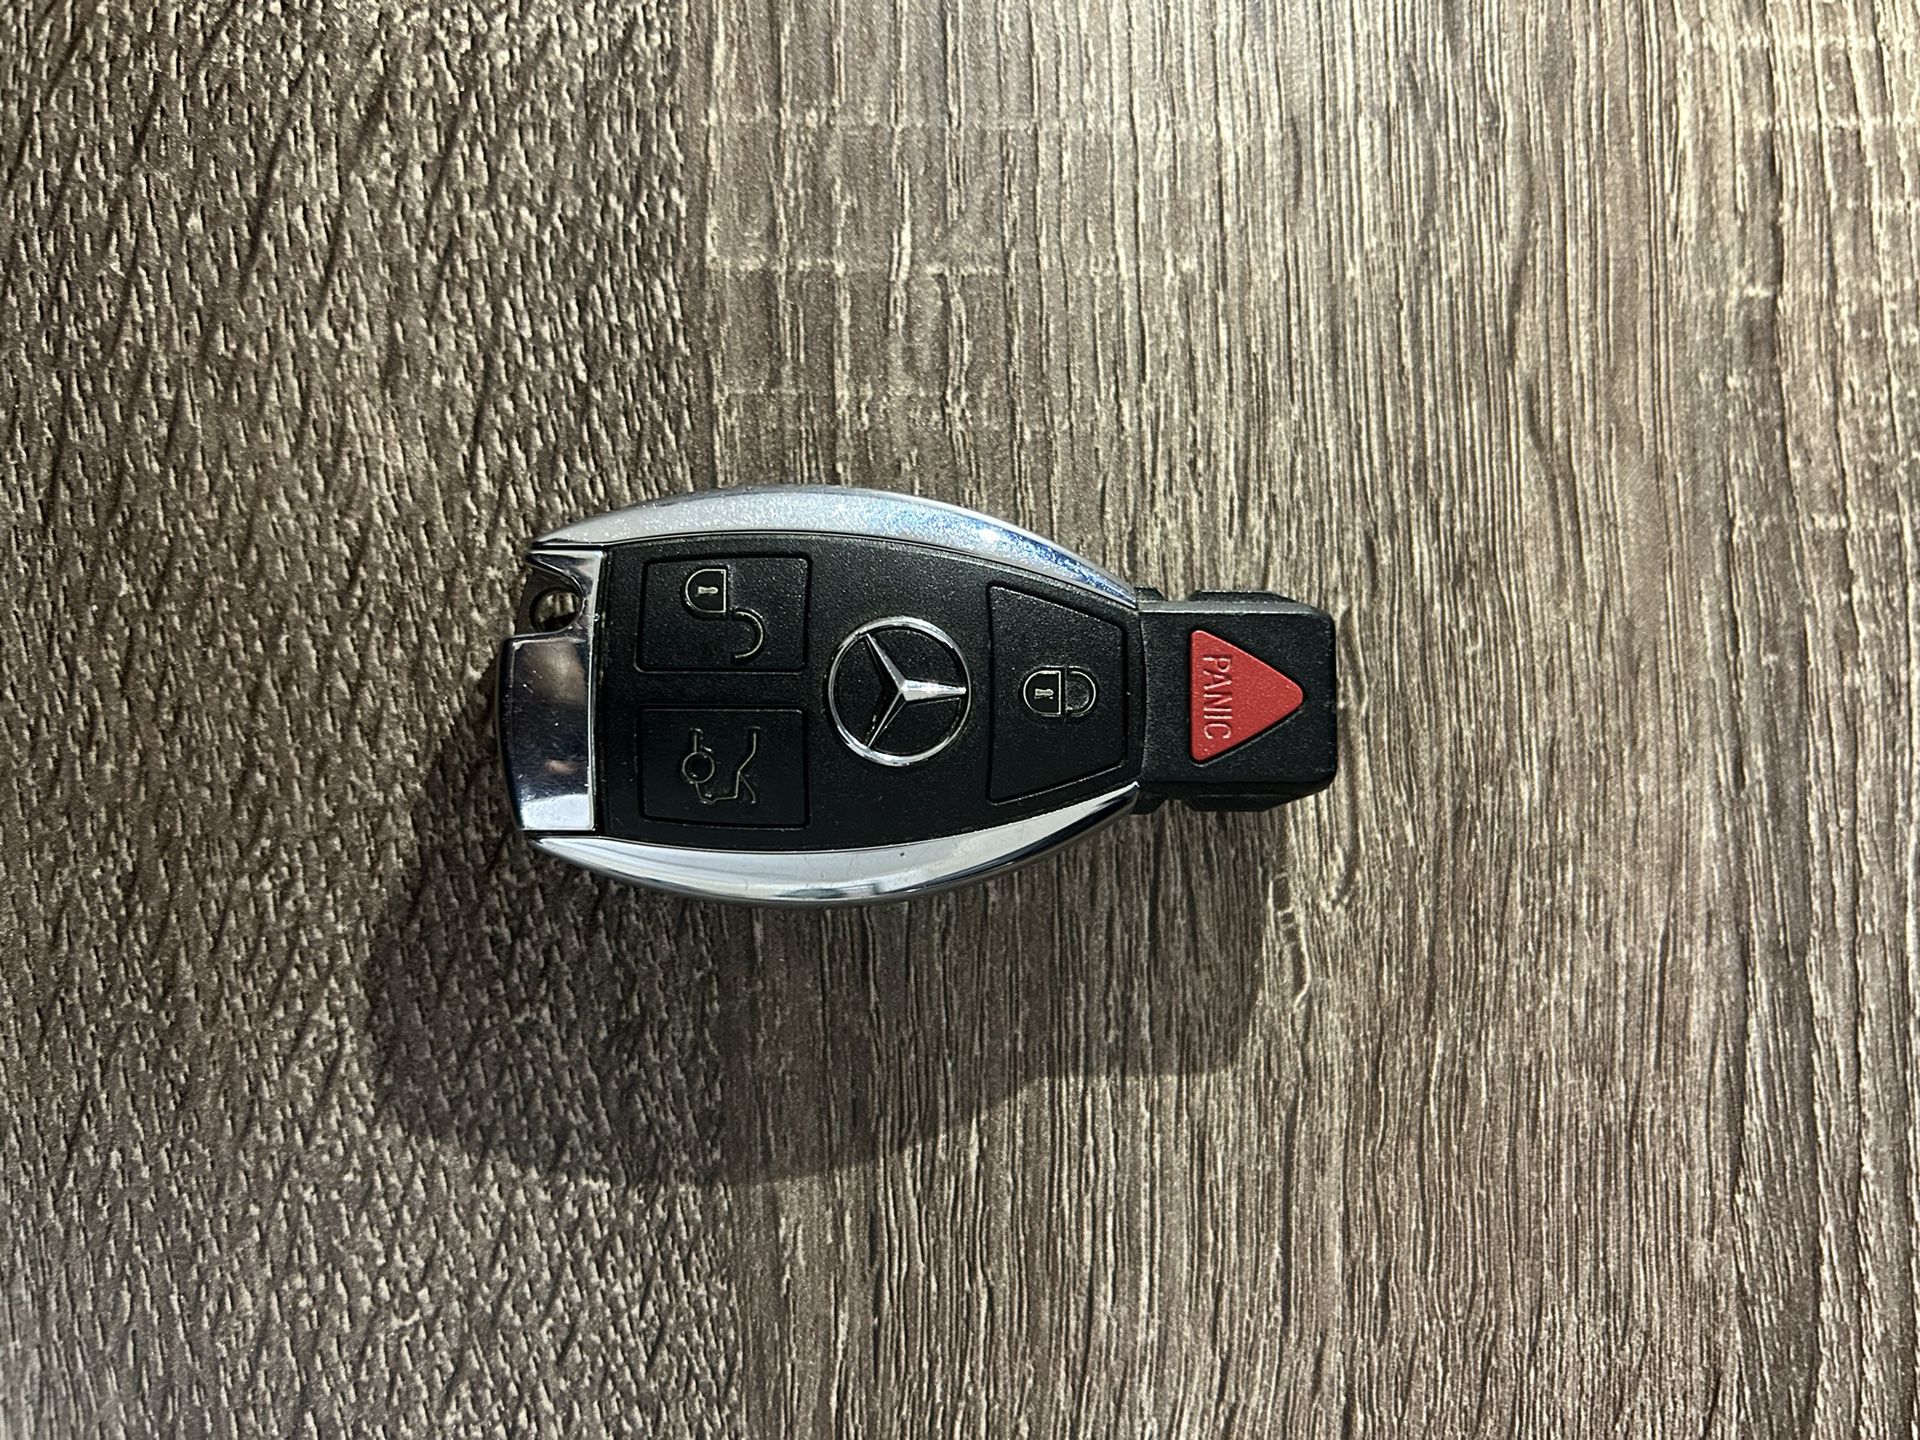 2013 CLS550 Used Factory OEM Genuine Mercedes-Benz Key FOB